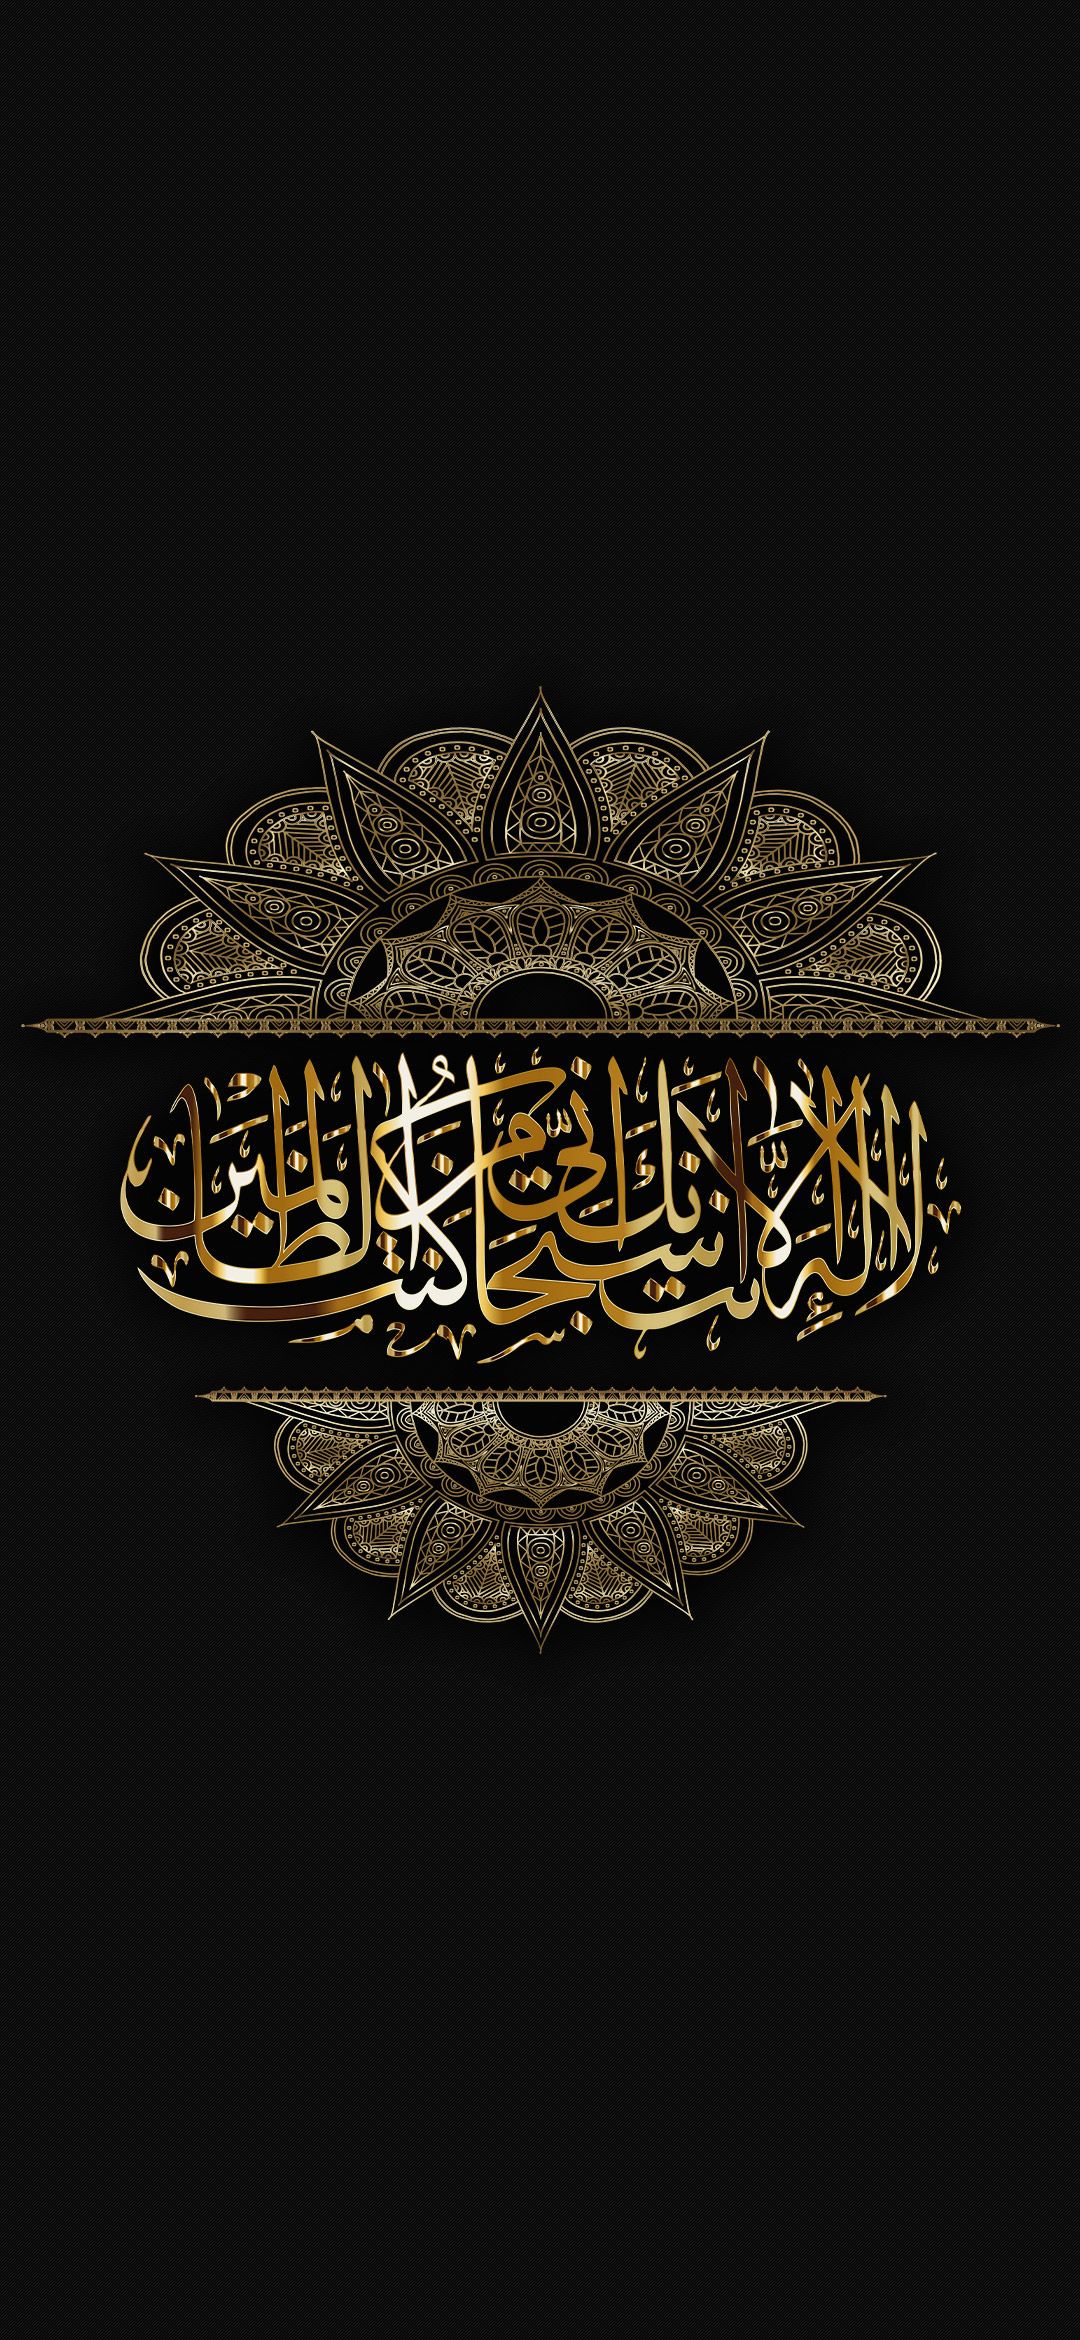 Islamic Calligraphy AMOLED HD Smartphone Wallpaper. Smartphone wallpaper, Islamic wallpaper hd, Beautiful wallpaper for phone